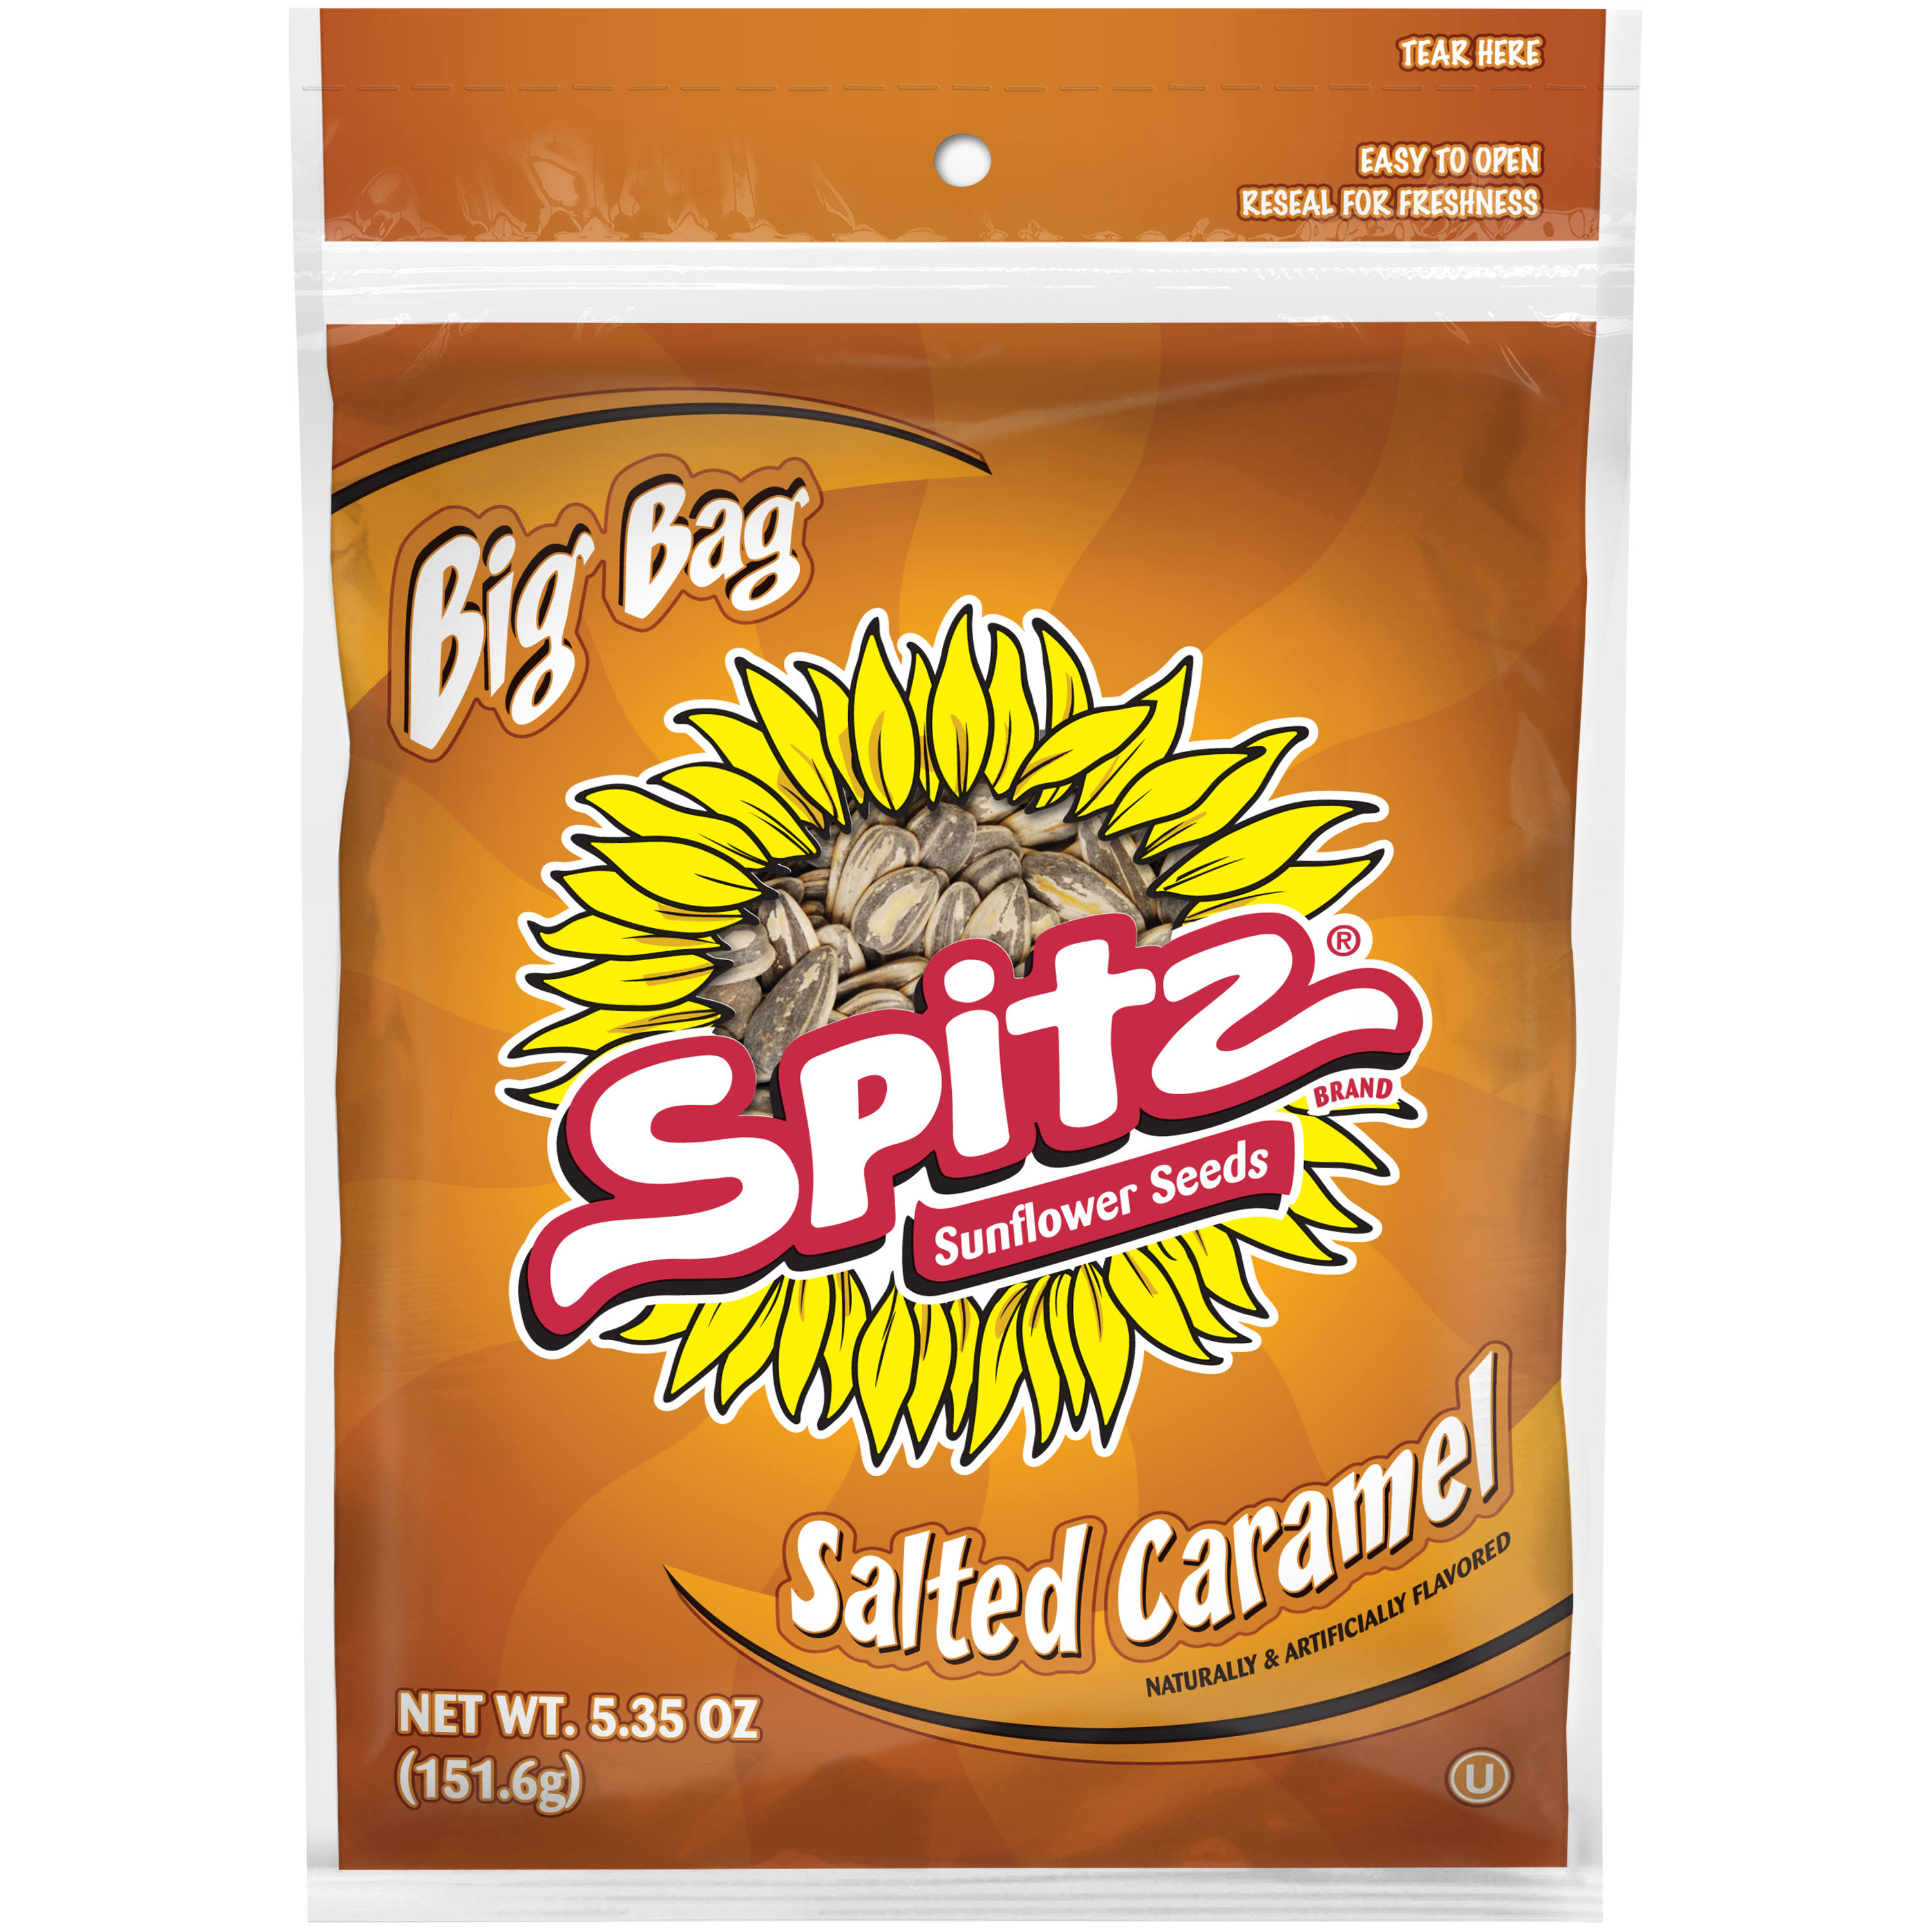 Spitz Sunflower Seeds - Salted Caramel